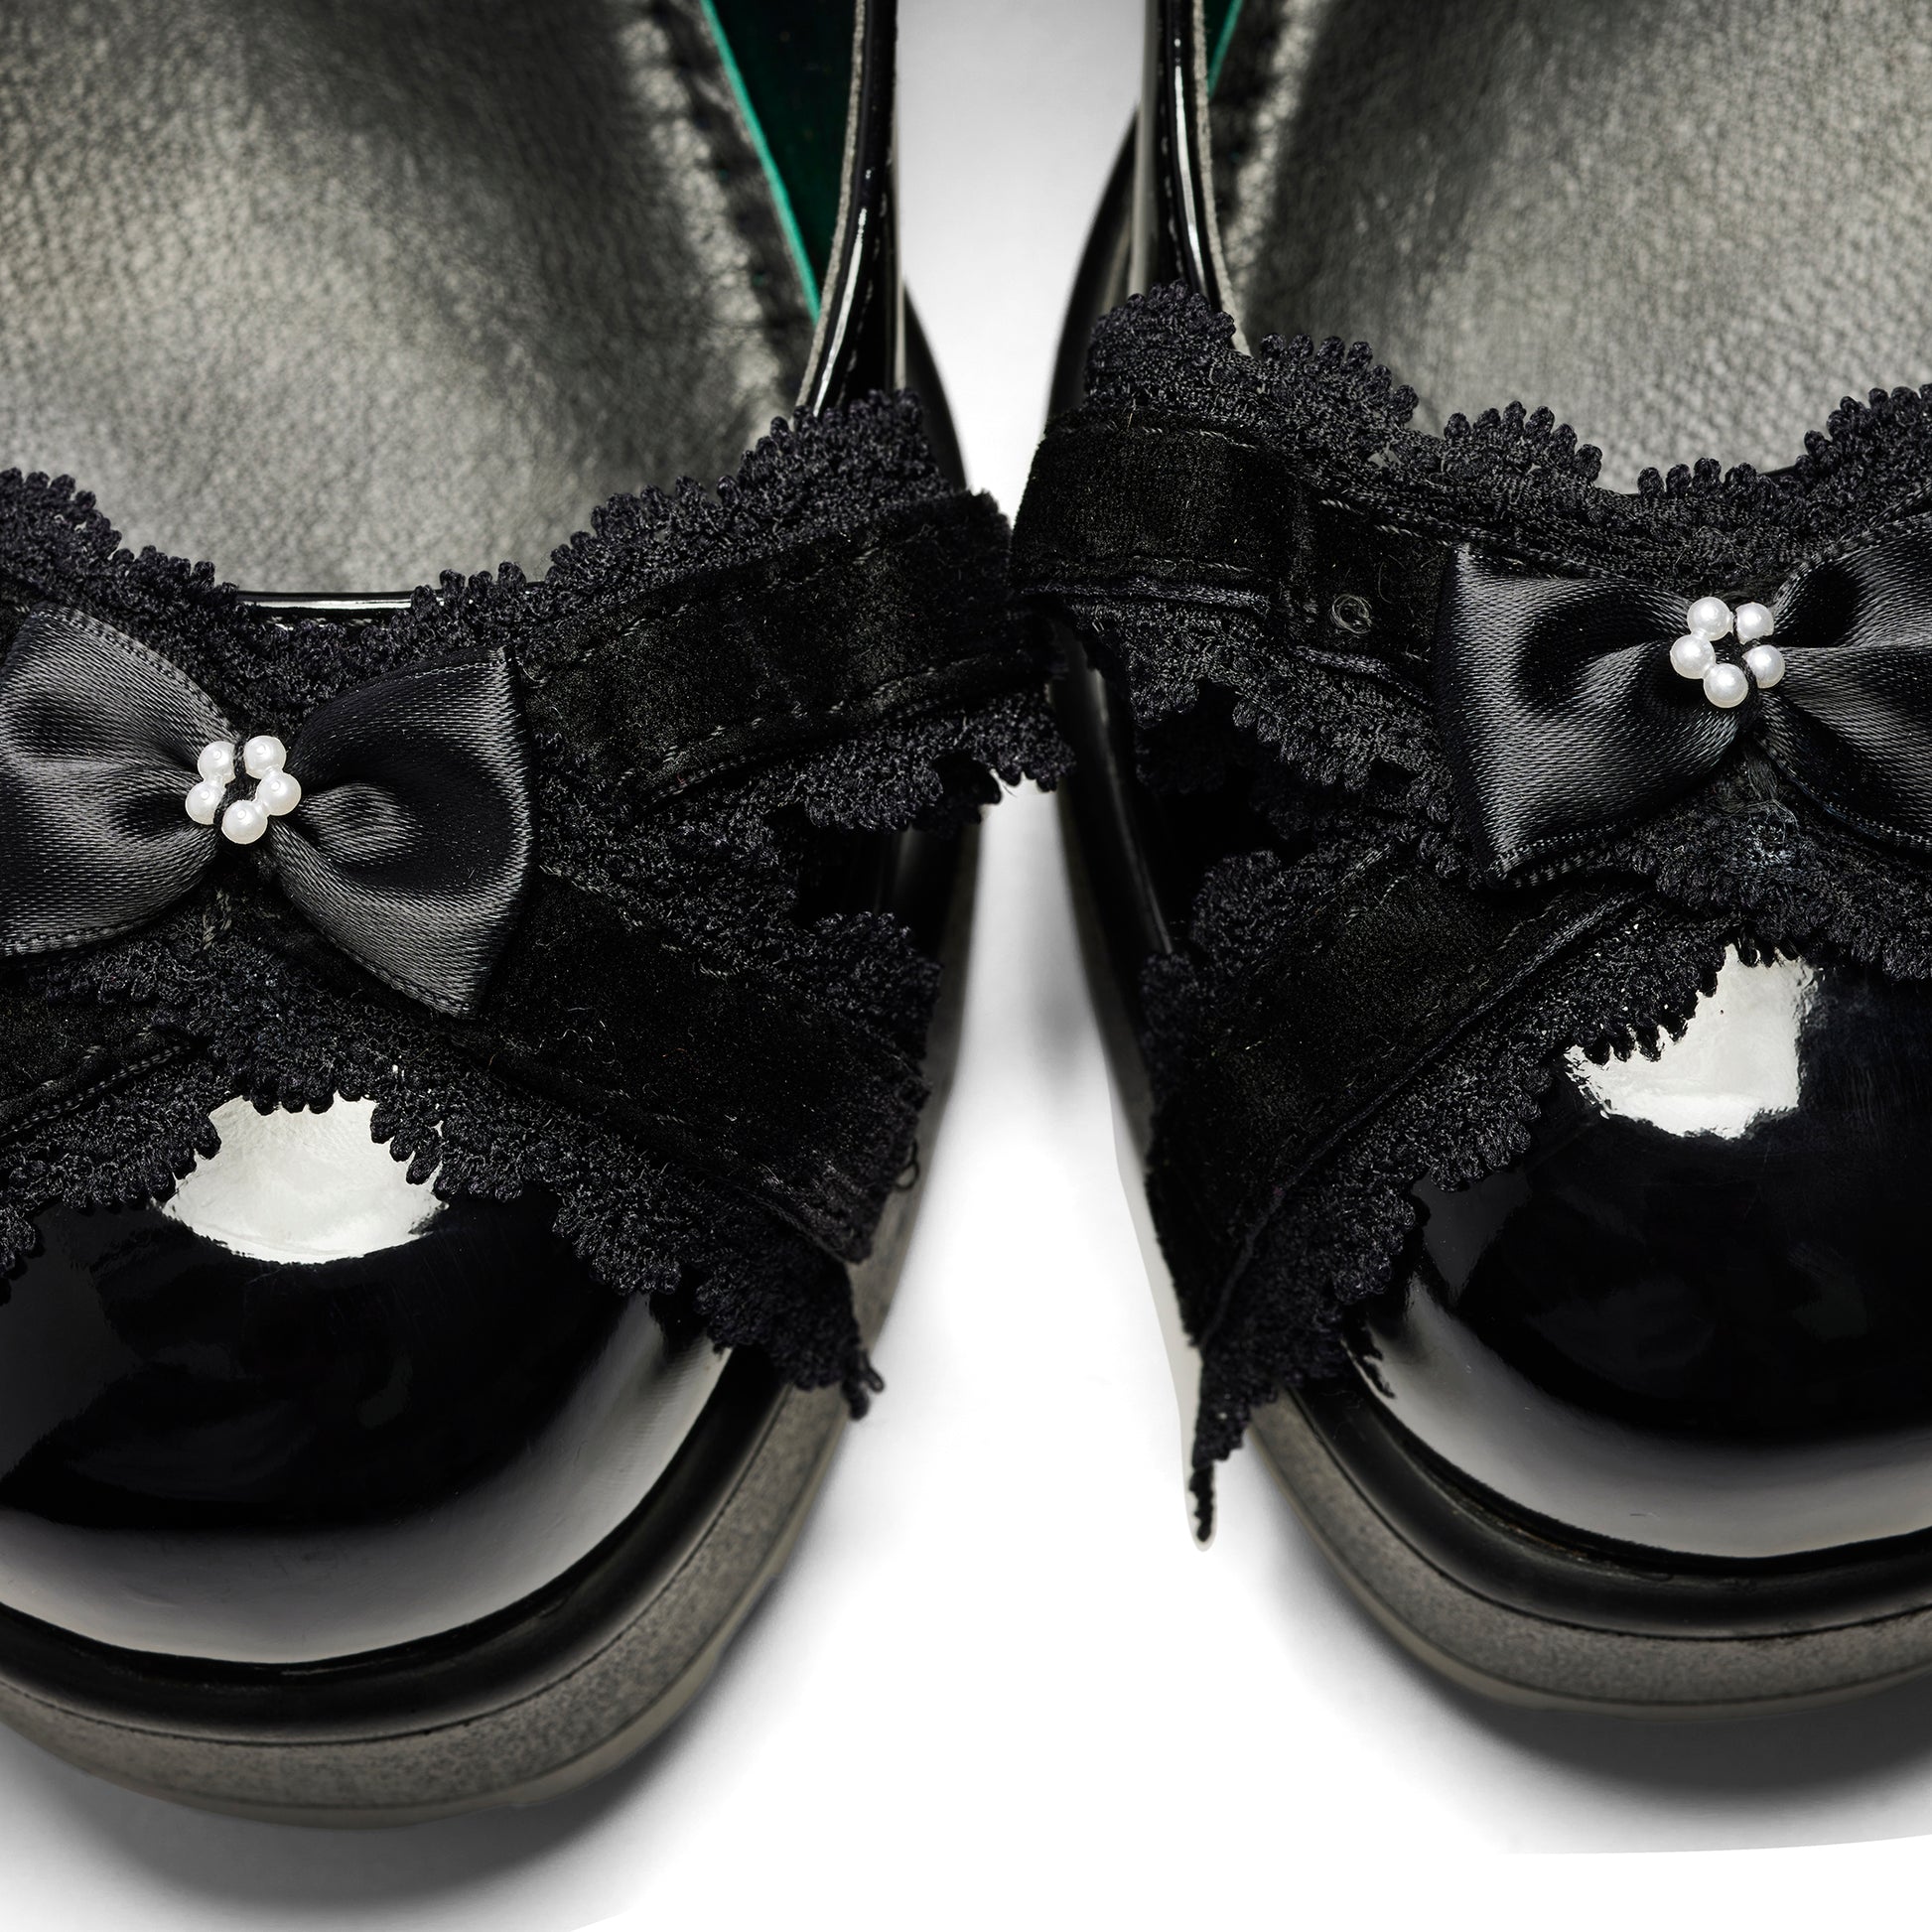 Tira May Jane Shoes 'Cute Gloom Edition' - Black - Koi Footwear - Top View